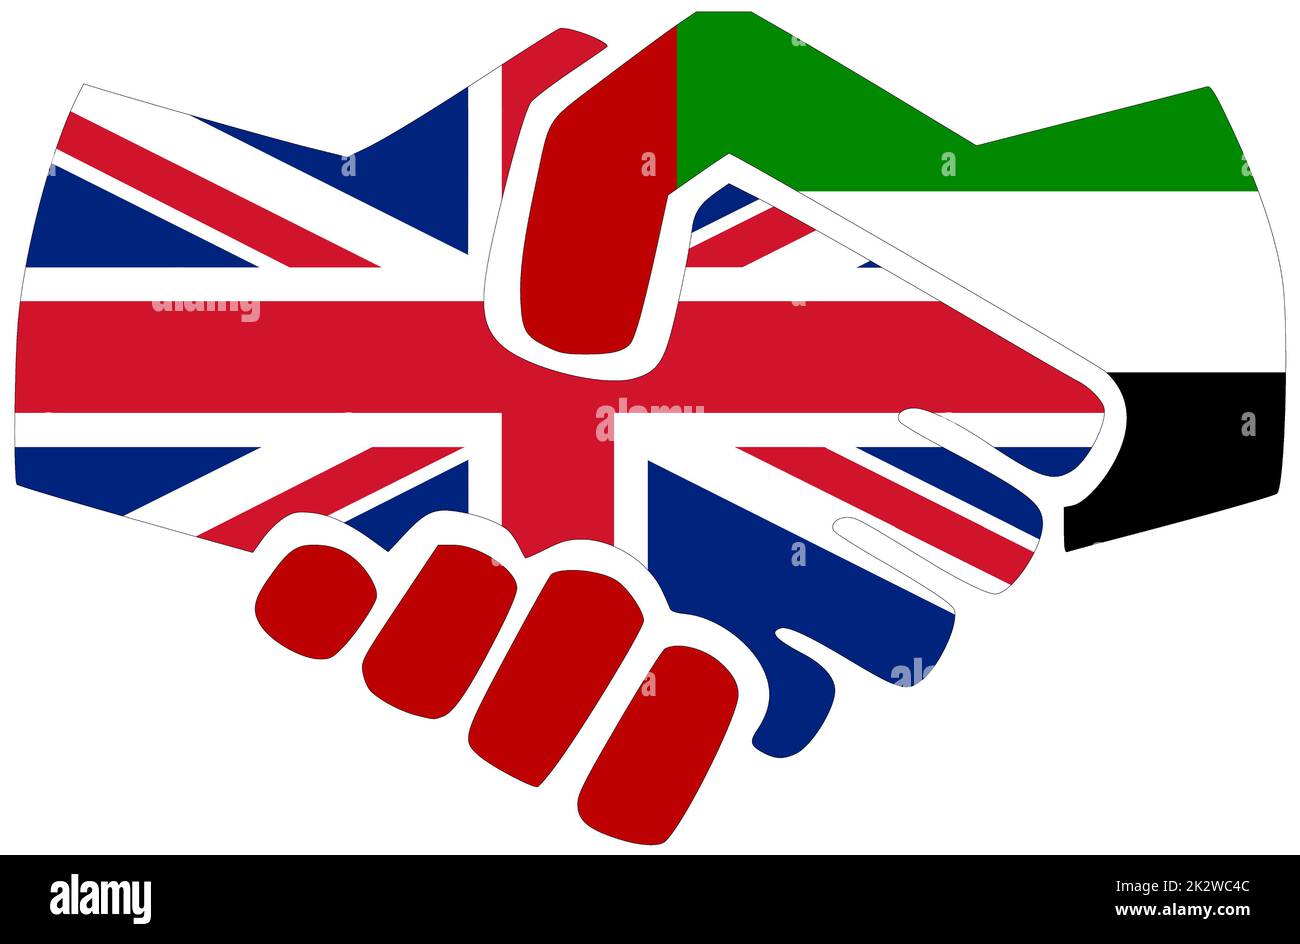 UK - UAE : Handshake, symbol of agreement or friendship Stock Photo